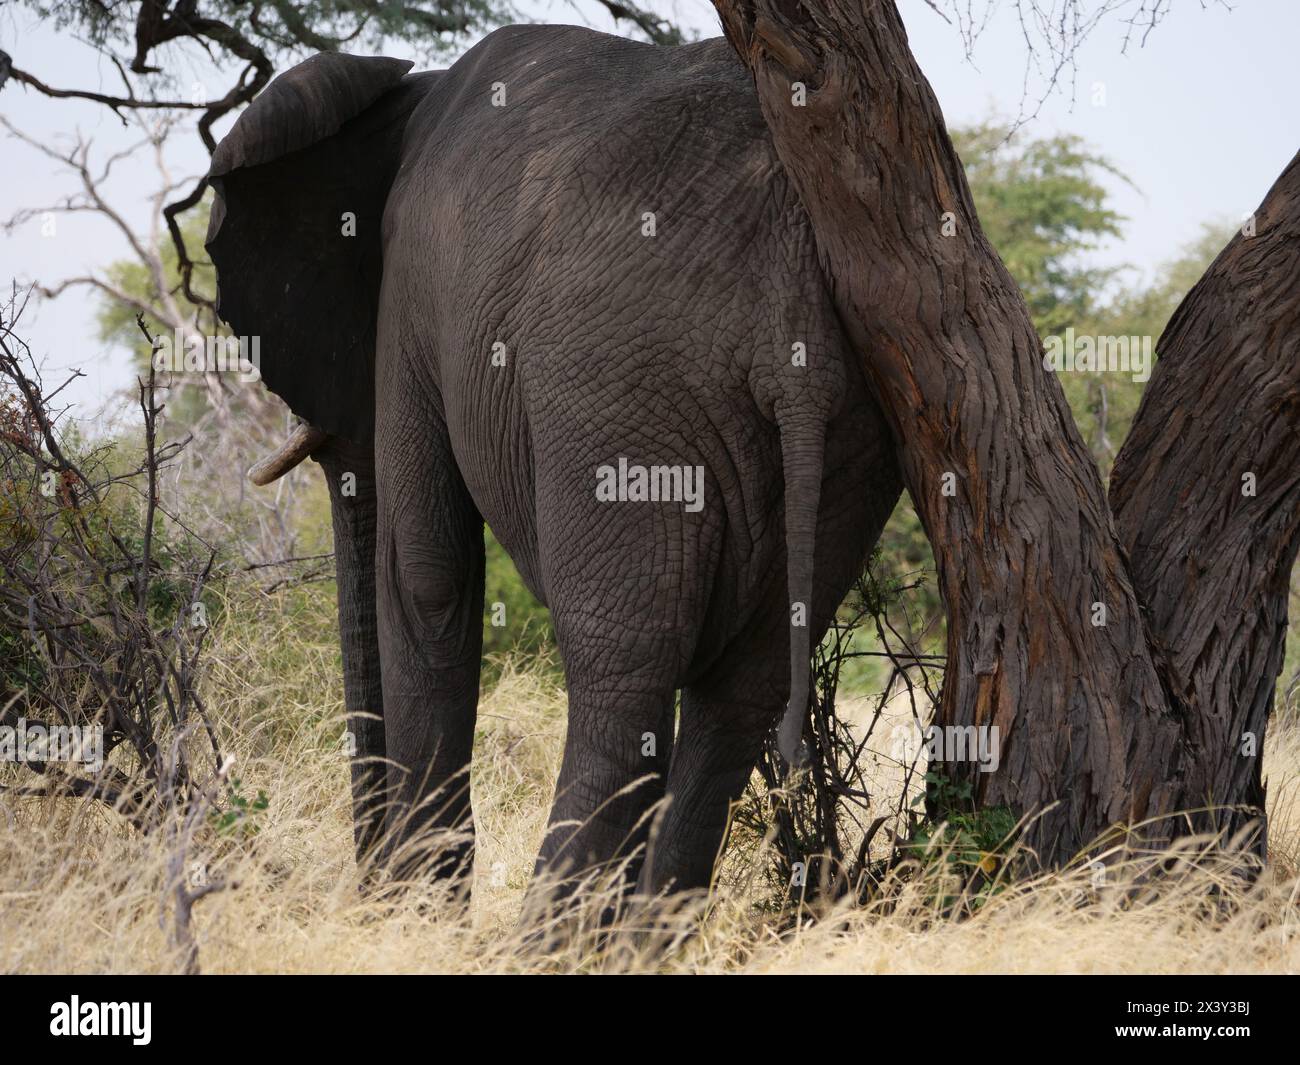 Elefant kratzt sich am Baum, Wellness für Elefanten Banque D'Images